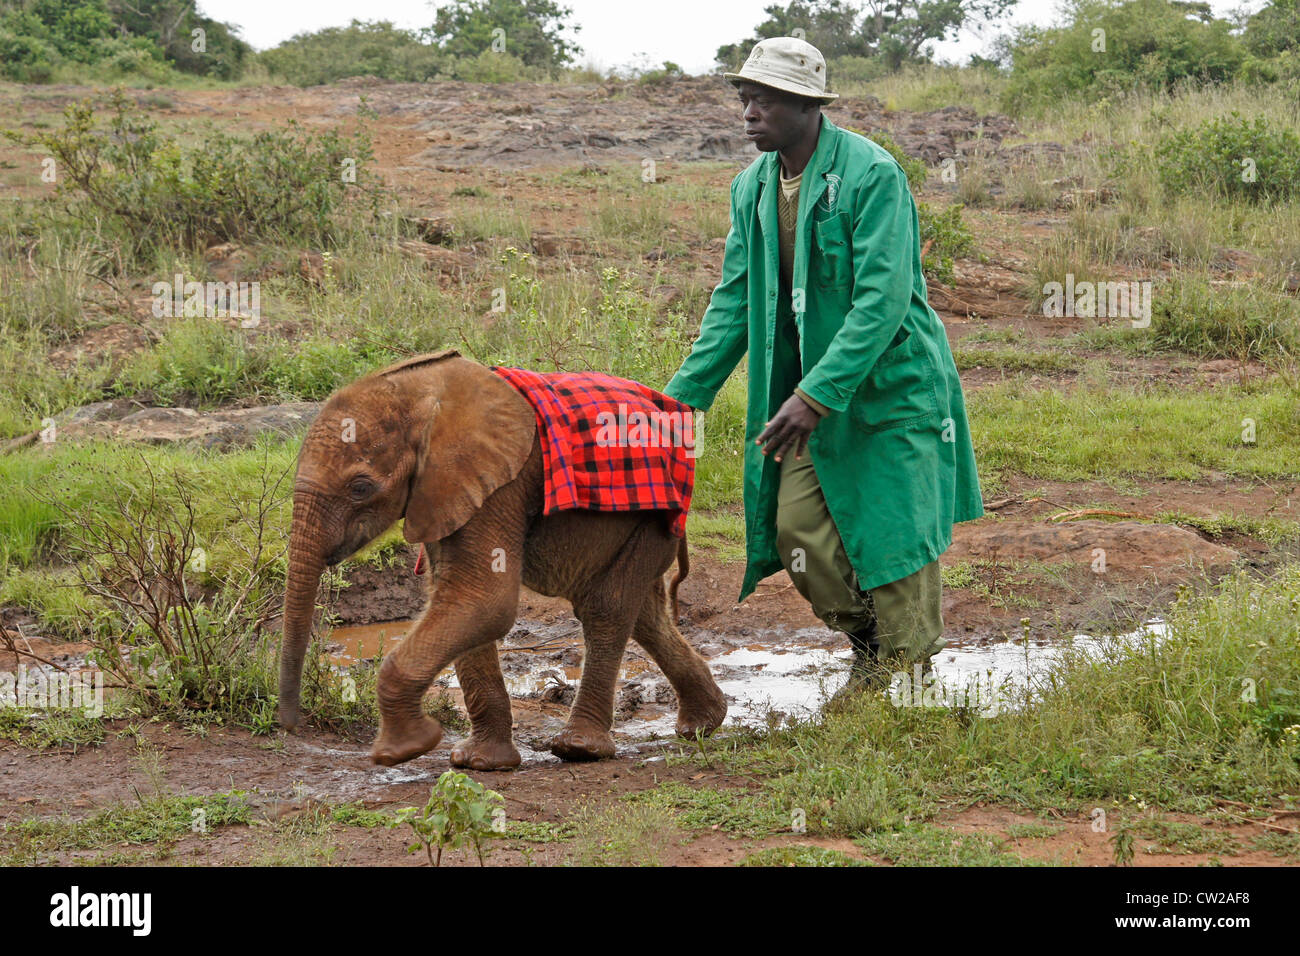 Orphaned elephant calf with caretaker, Nairobi, Kenya Stock Photo